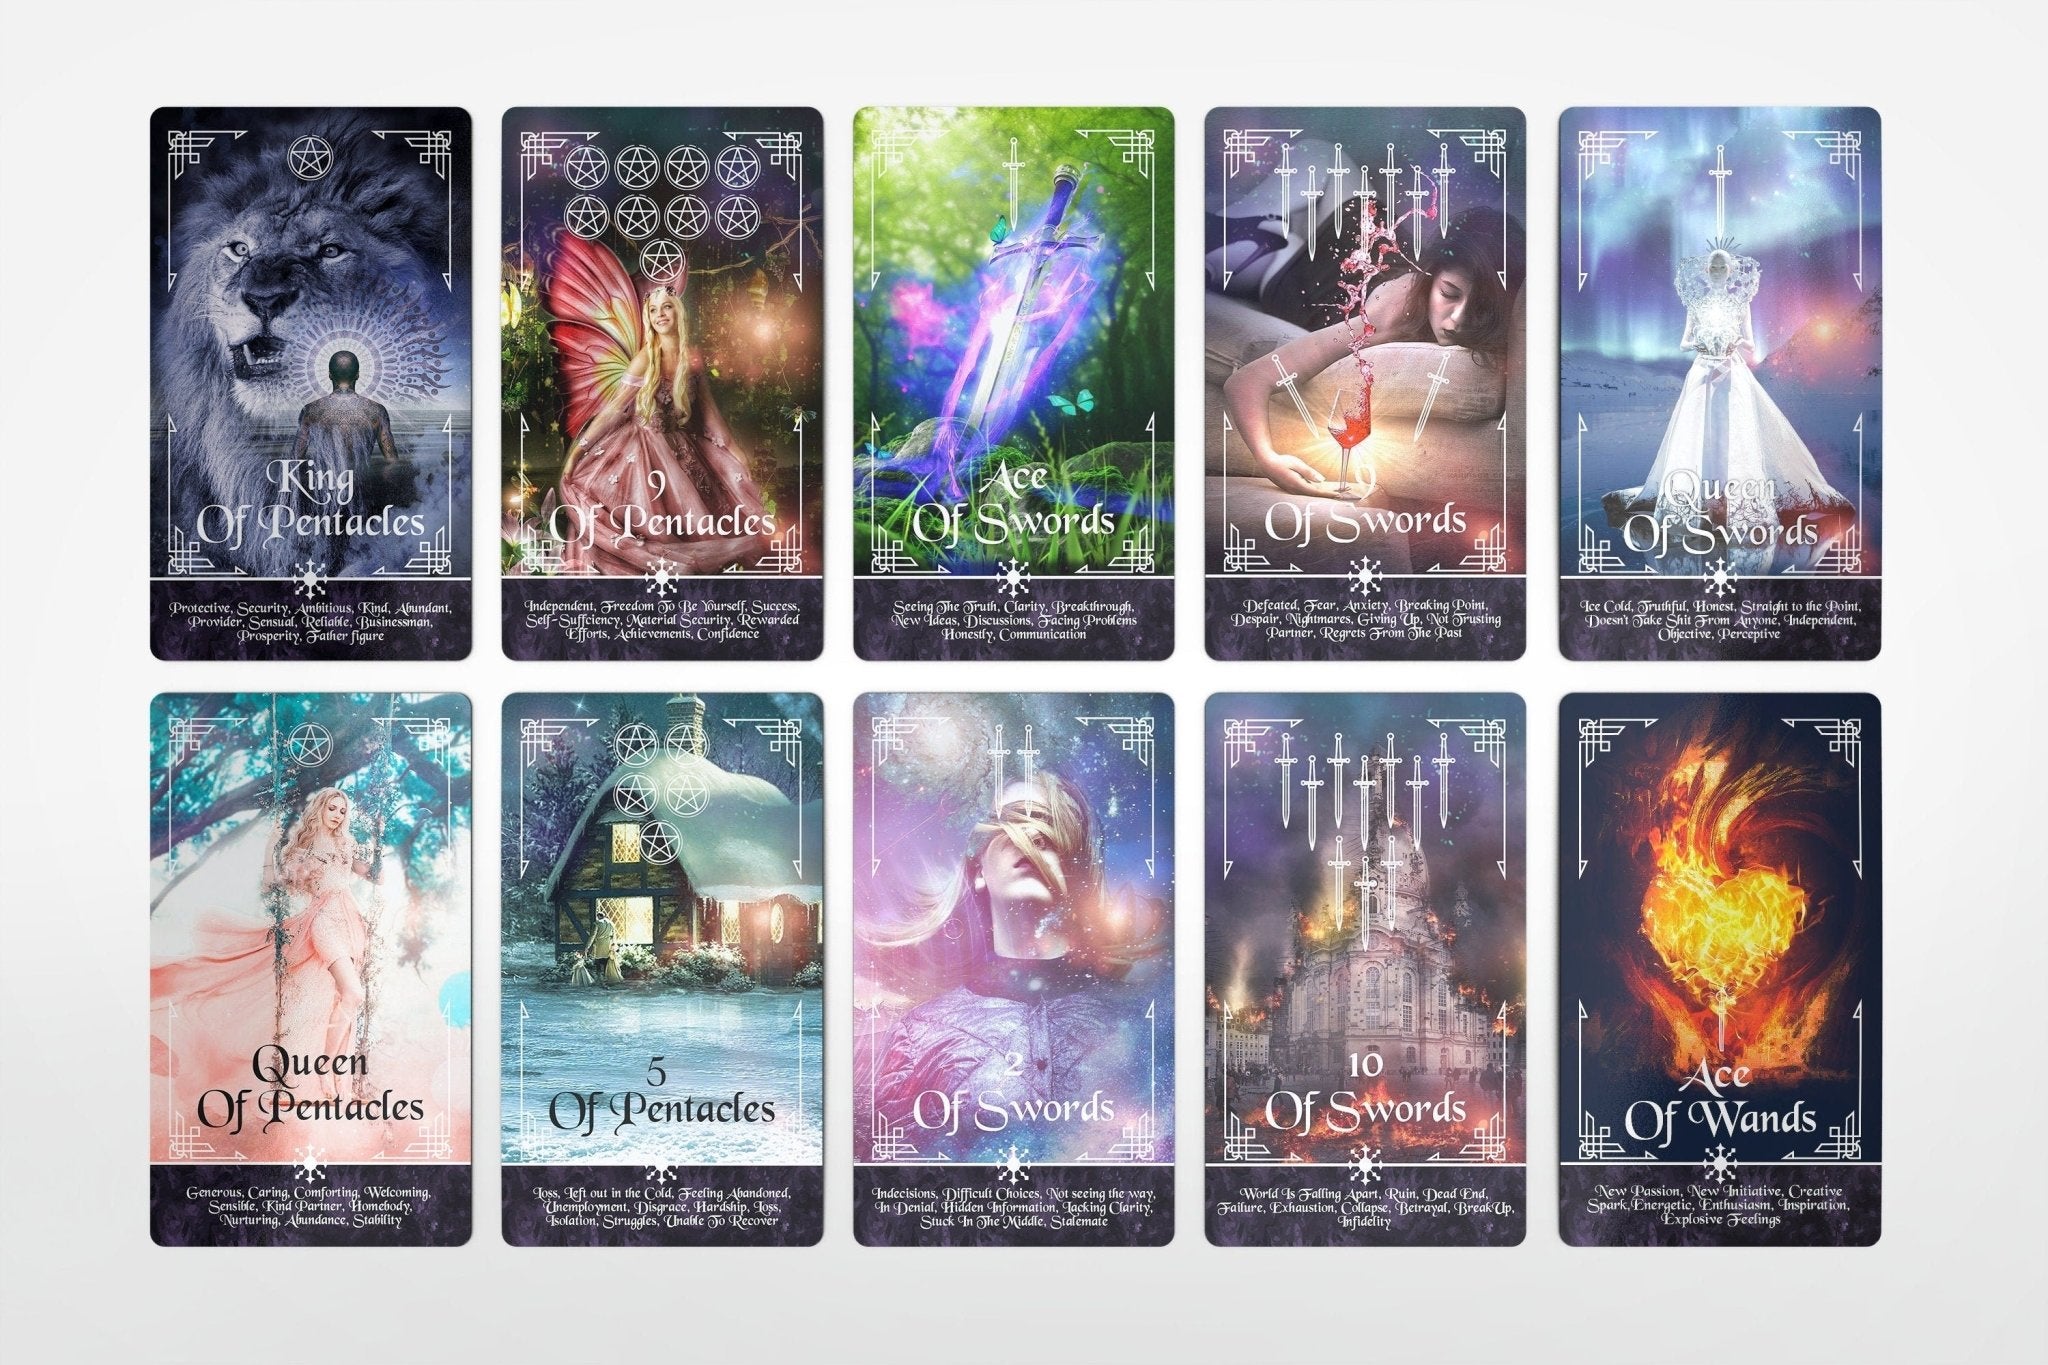 Mystical Realms Tarot Deck Beginner 78 Cards Keywords - MysticBluuMoonTarot